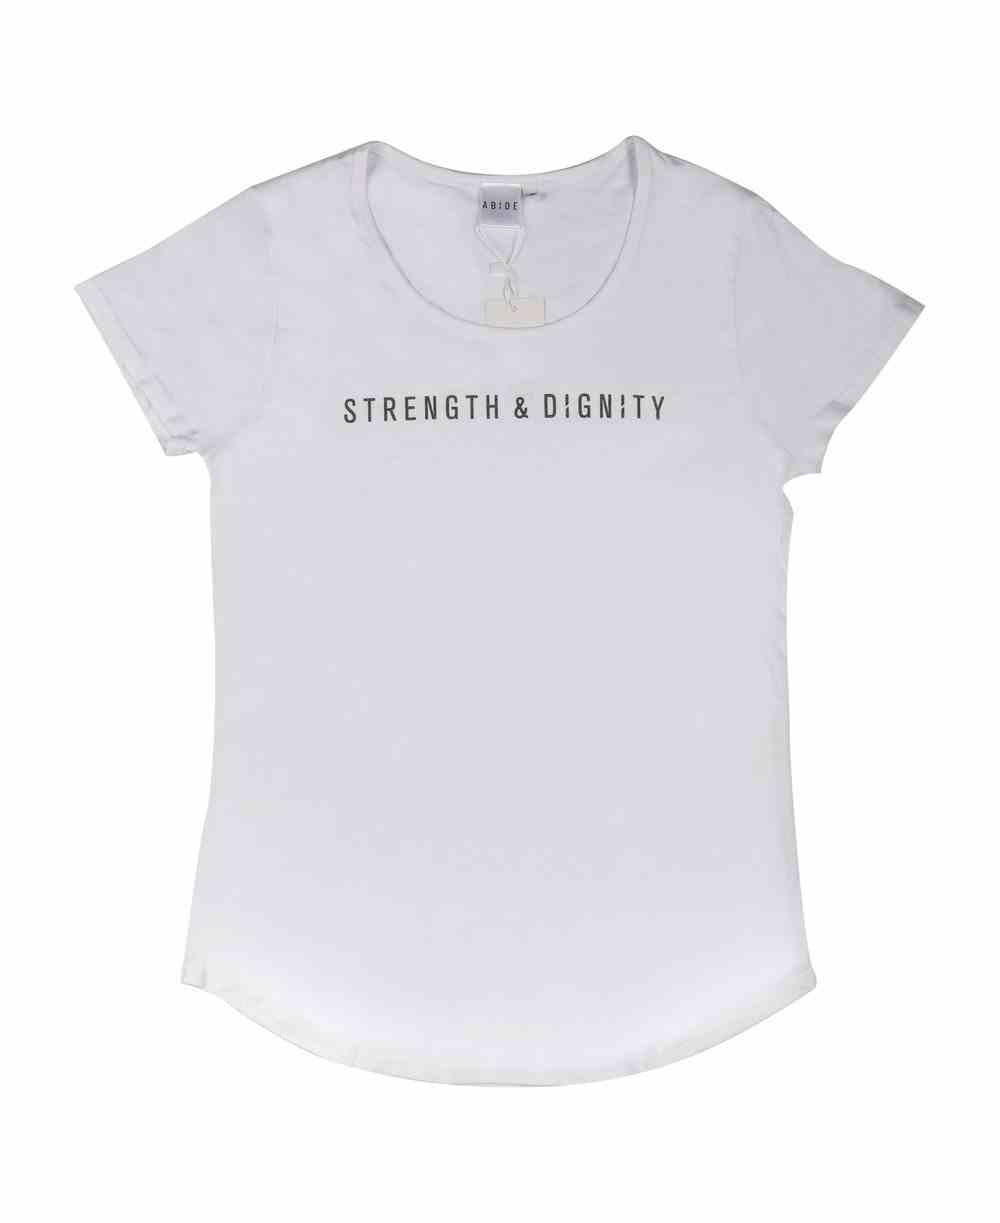 Womens Mali Tee: Strength & Dignity, Medium, White With Black Metallic Print (Abide T-shirt Apparel Series) Soft Goods